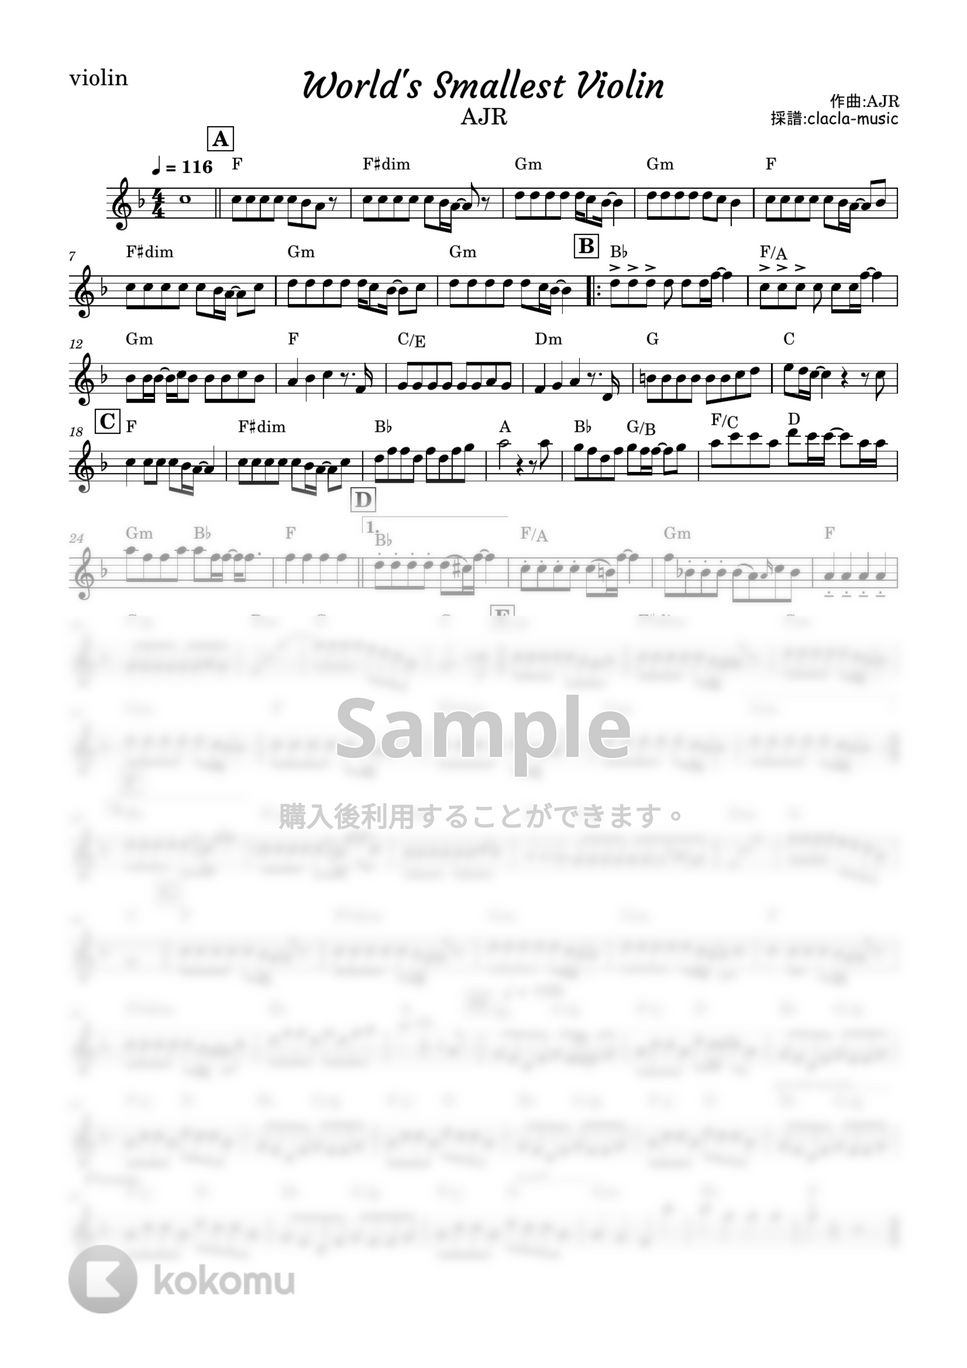 AJR - World' Smallest Violin (World's Smallest Violin、ヴァイオリン、コード付き) by clacla-music